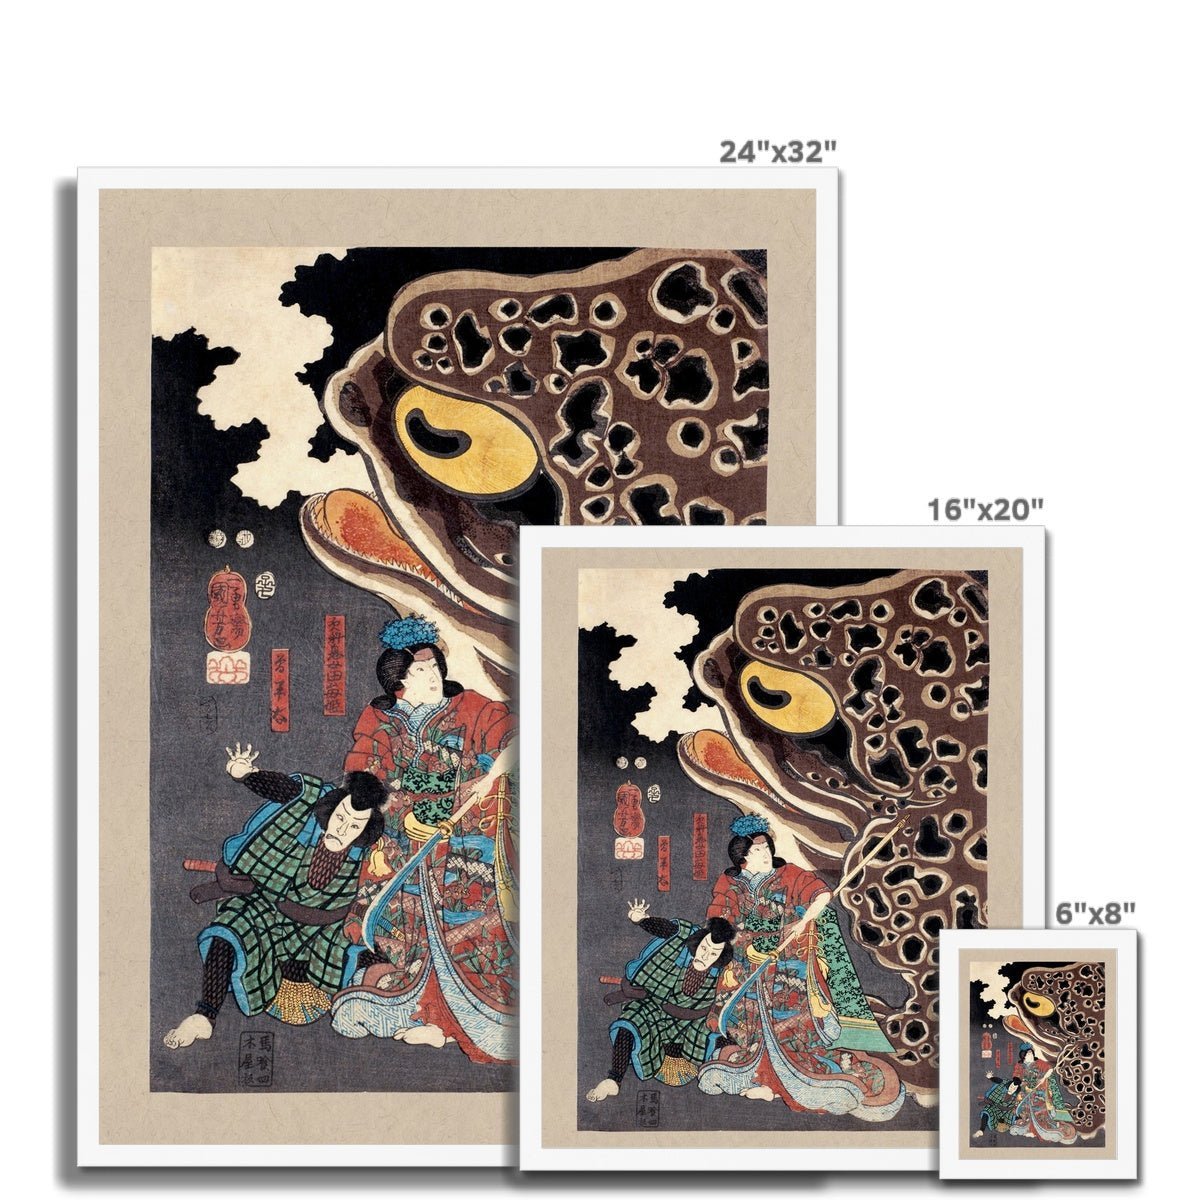 Framed Print 6"x8" / White Frame Utagawa Kuniyoshi: Jiraya fighting Orochimaru Japanese Ukiyo-e Samurai Ronin Frog Toad Decor Antique Asian Framed Art Print